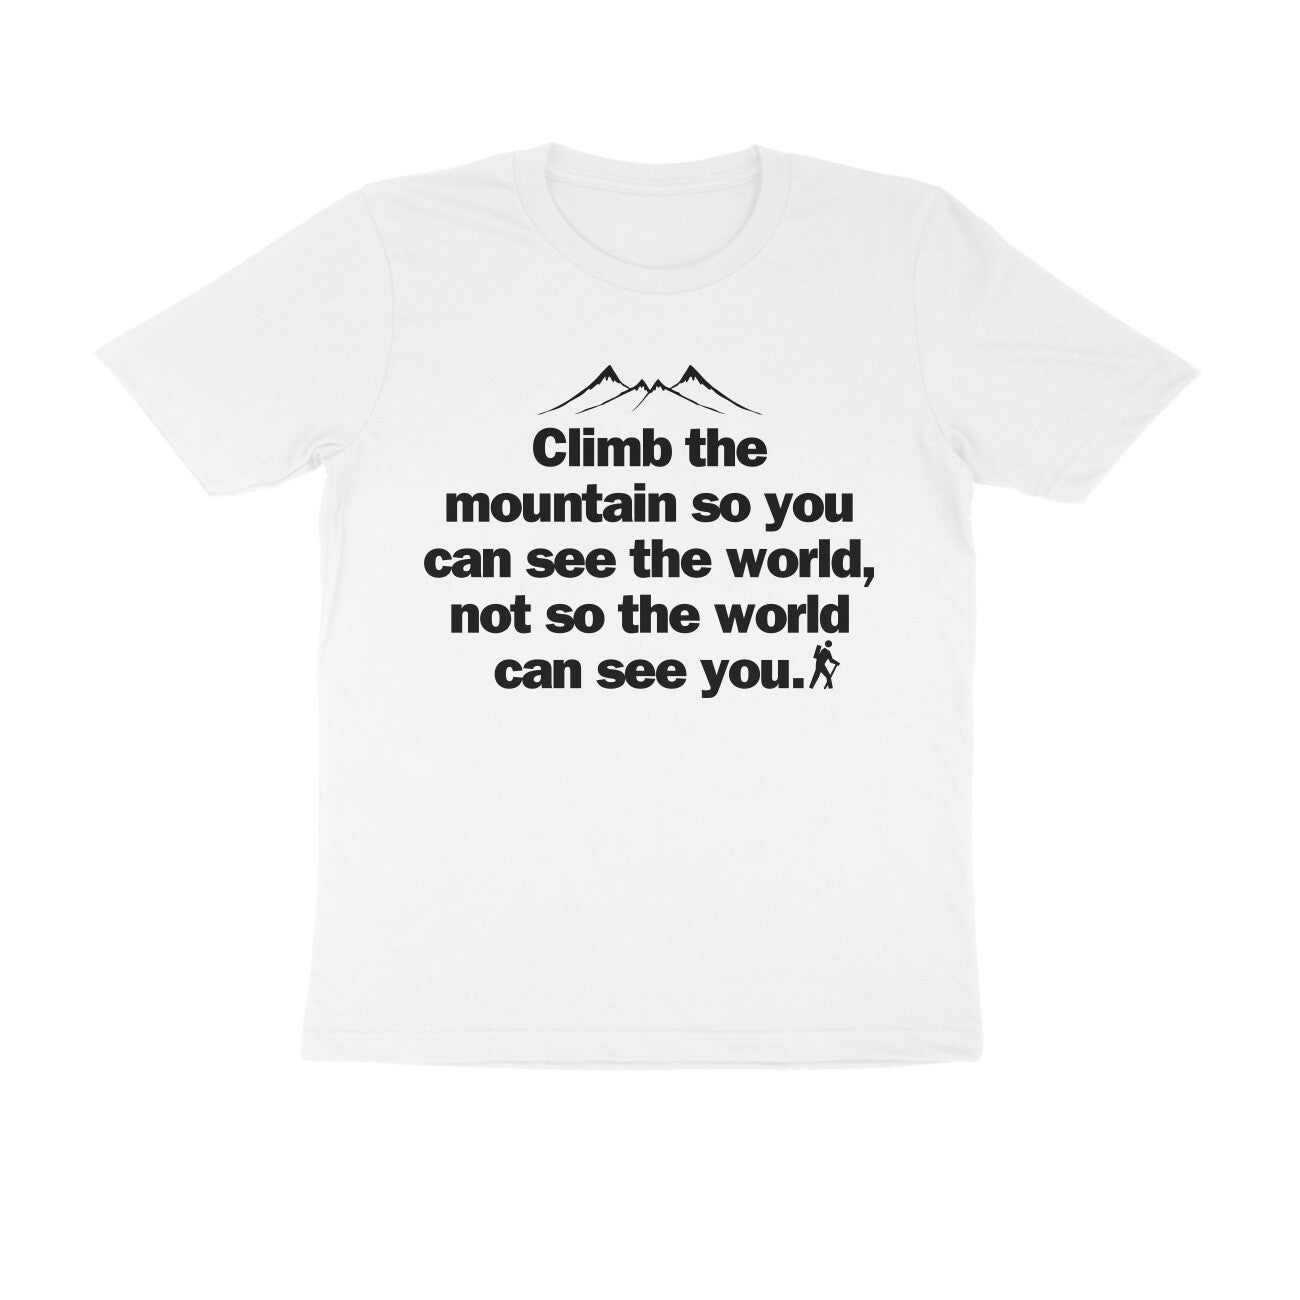 Climb the mountain so you can... Black Text Men's T-shirt